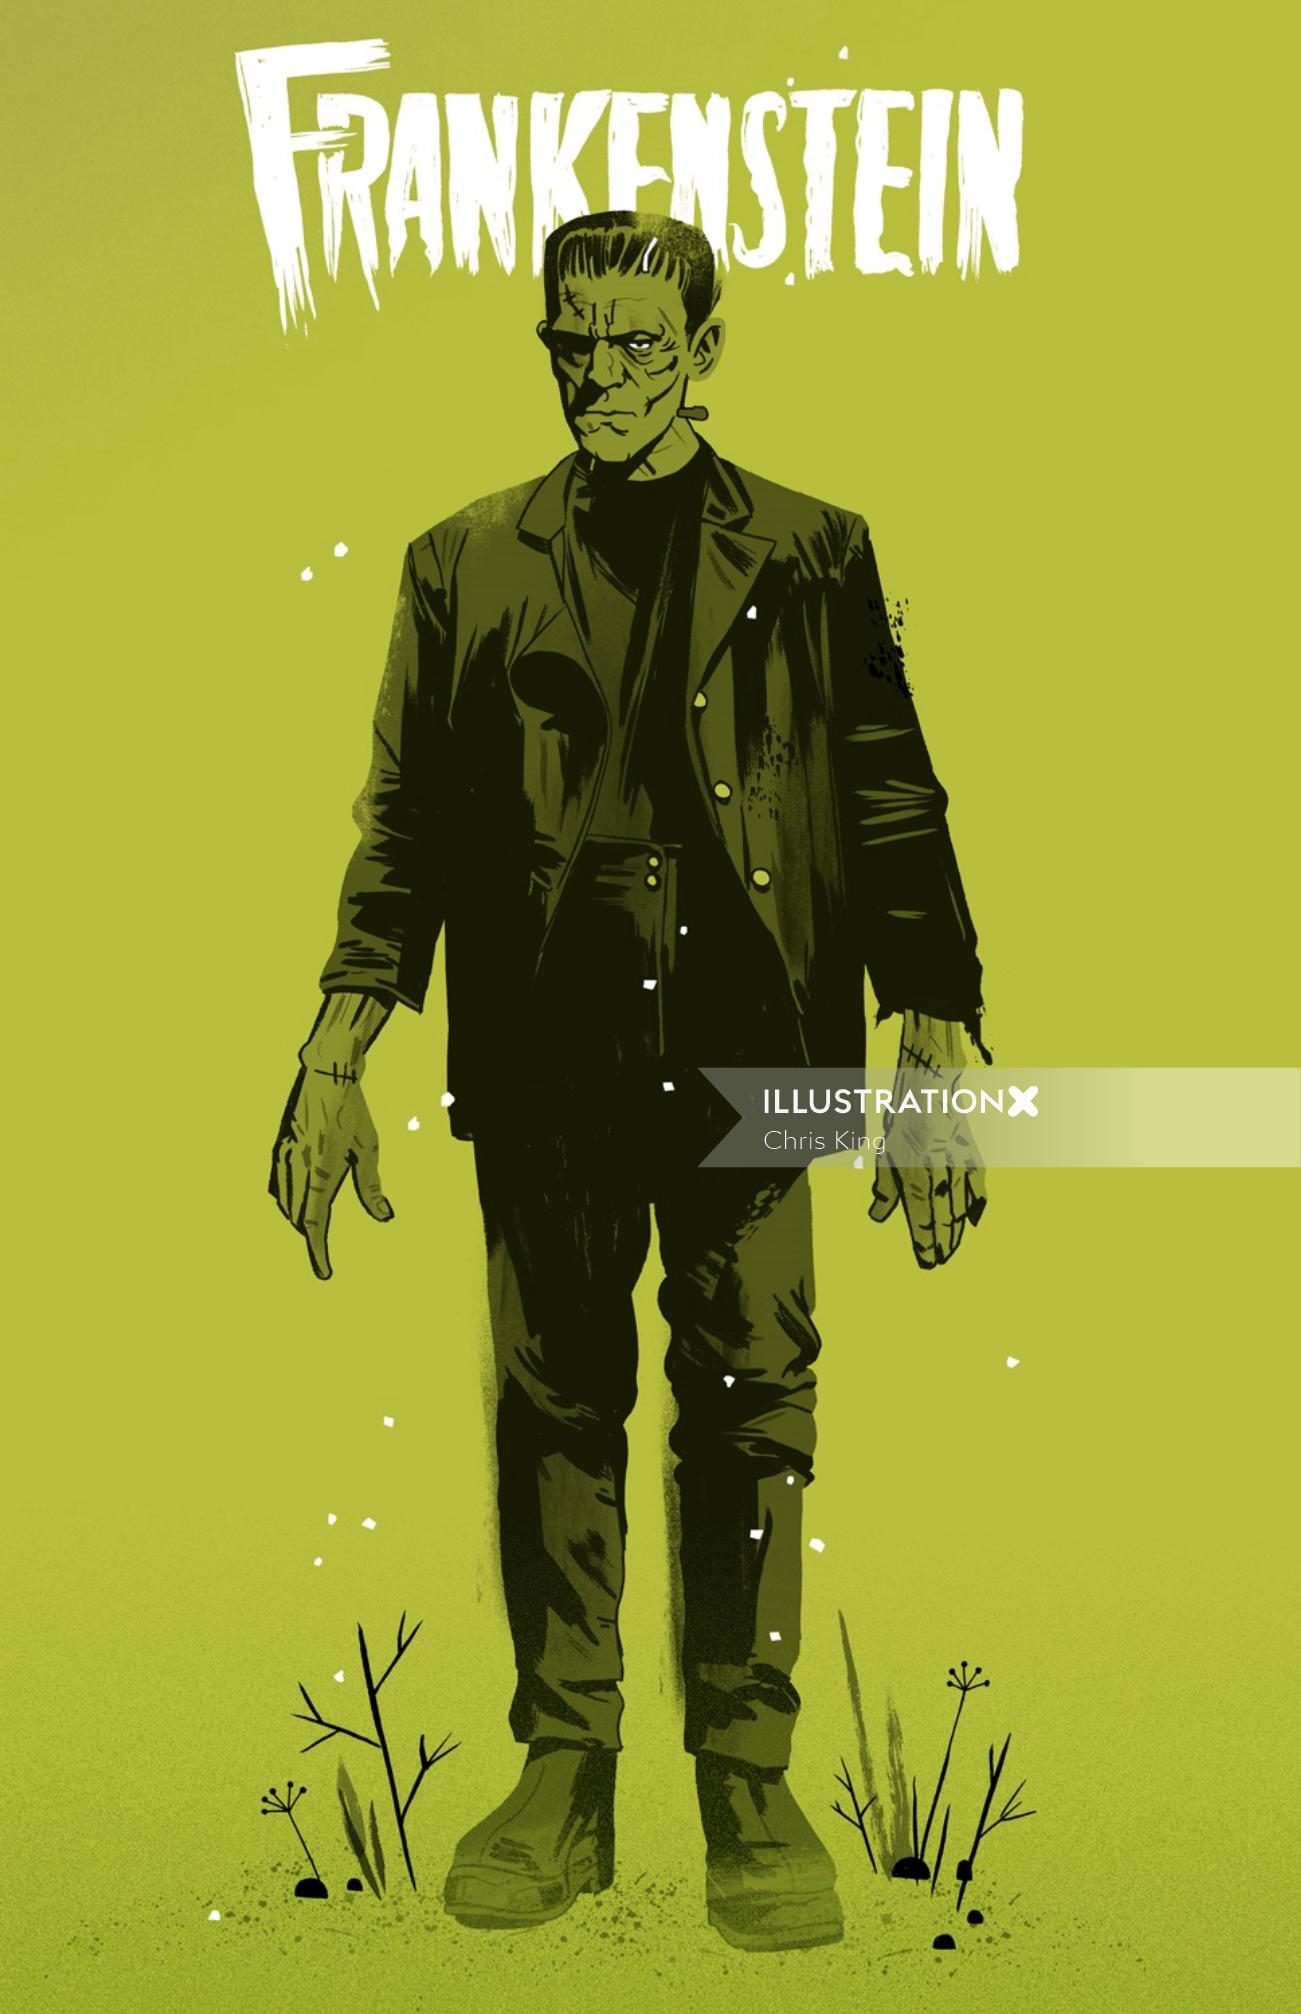 Frankenstein illustration by Cris King